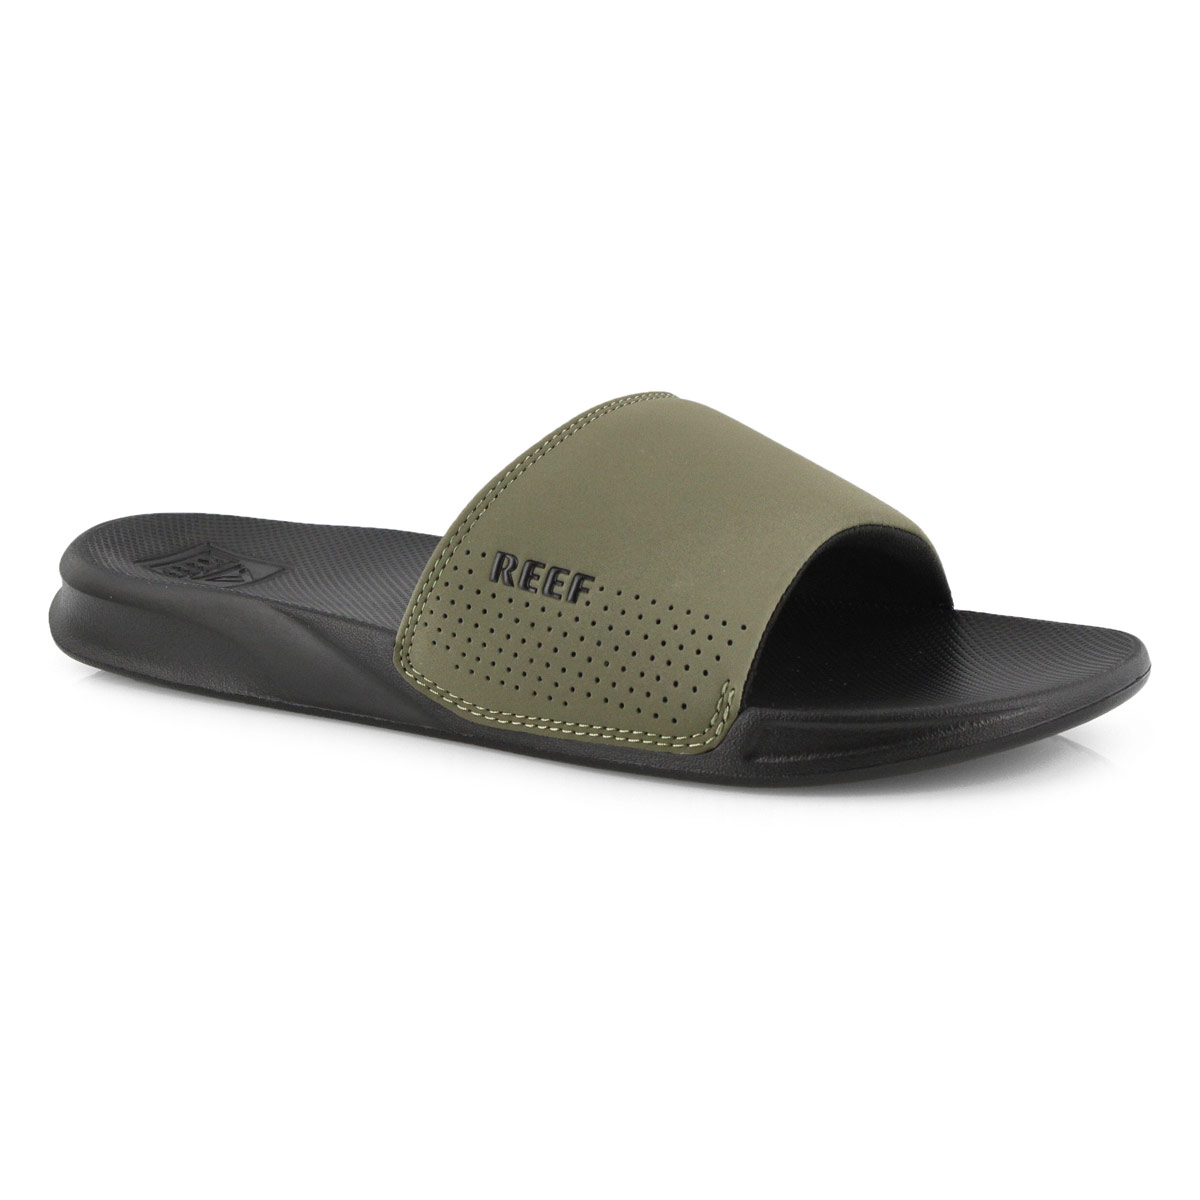 reef one slide sandal